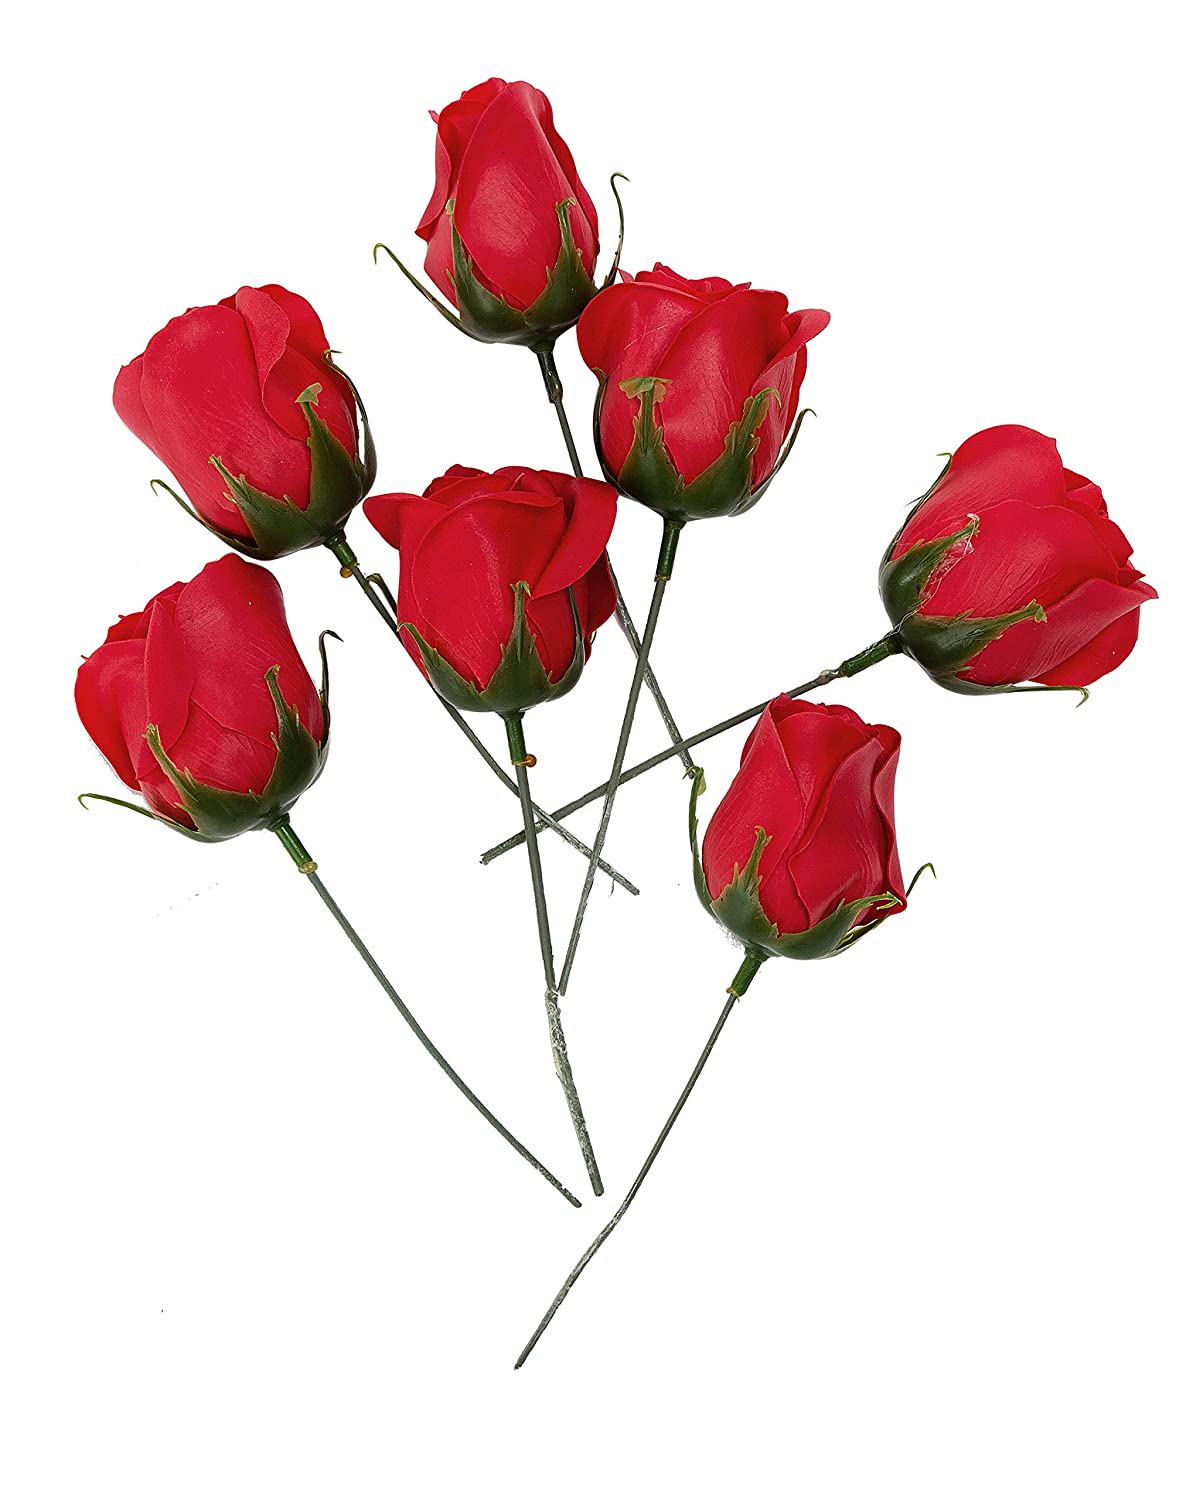 Red Rose Jasmine Home Bath Gift Set - 8Pc Valentines Gift